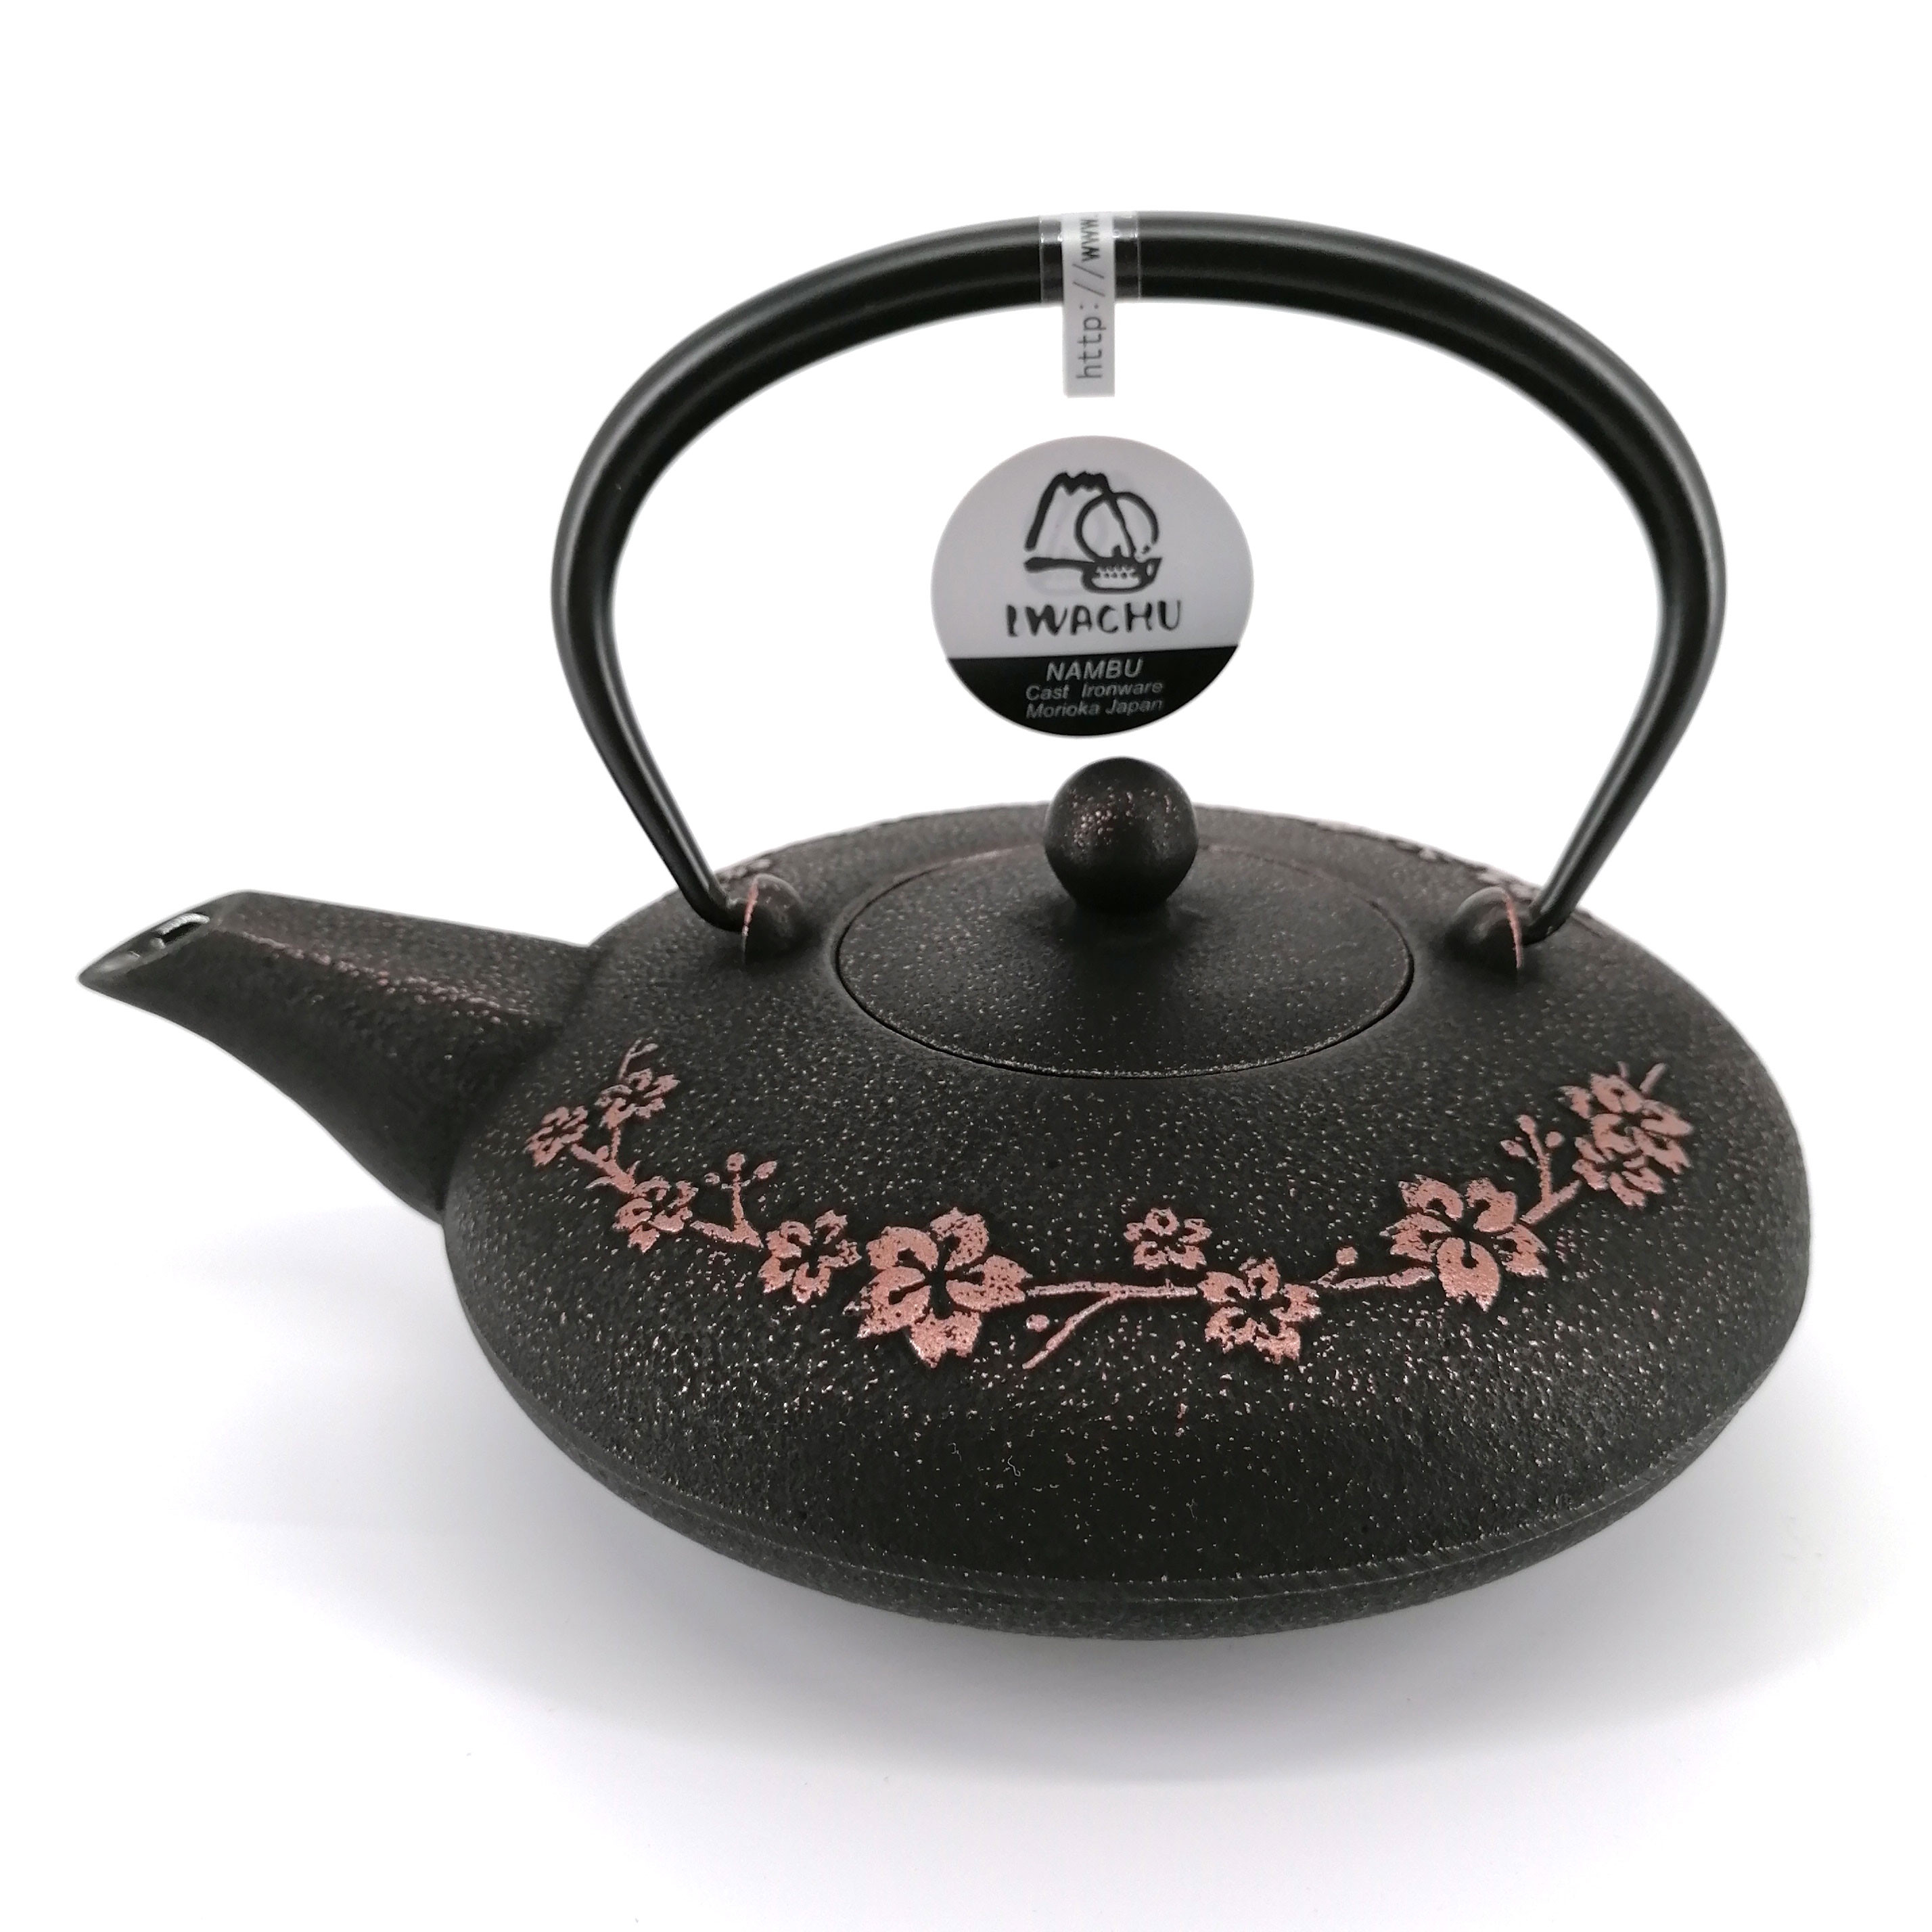 https://kyotoboutique.fr/55793/japanese-cast-iron-teapot-iwachu-wa-sakura-06-lt-copper-black.jpg